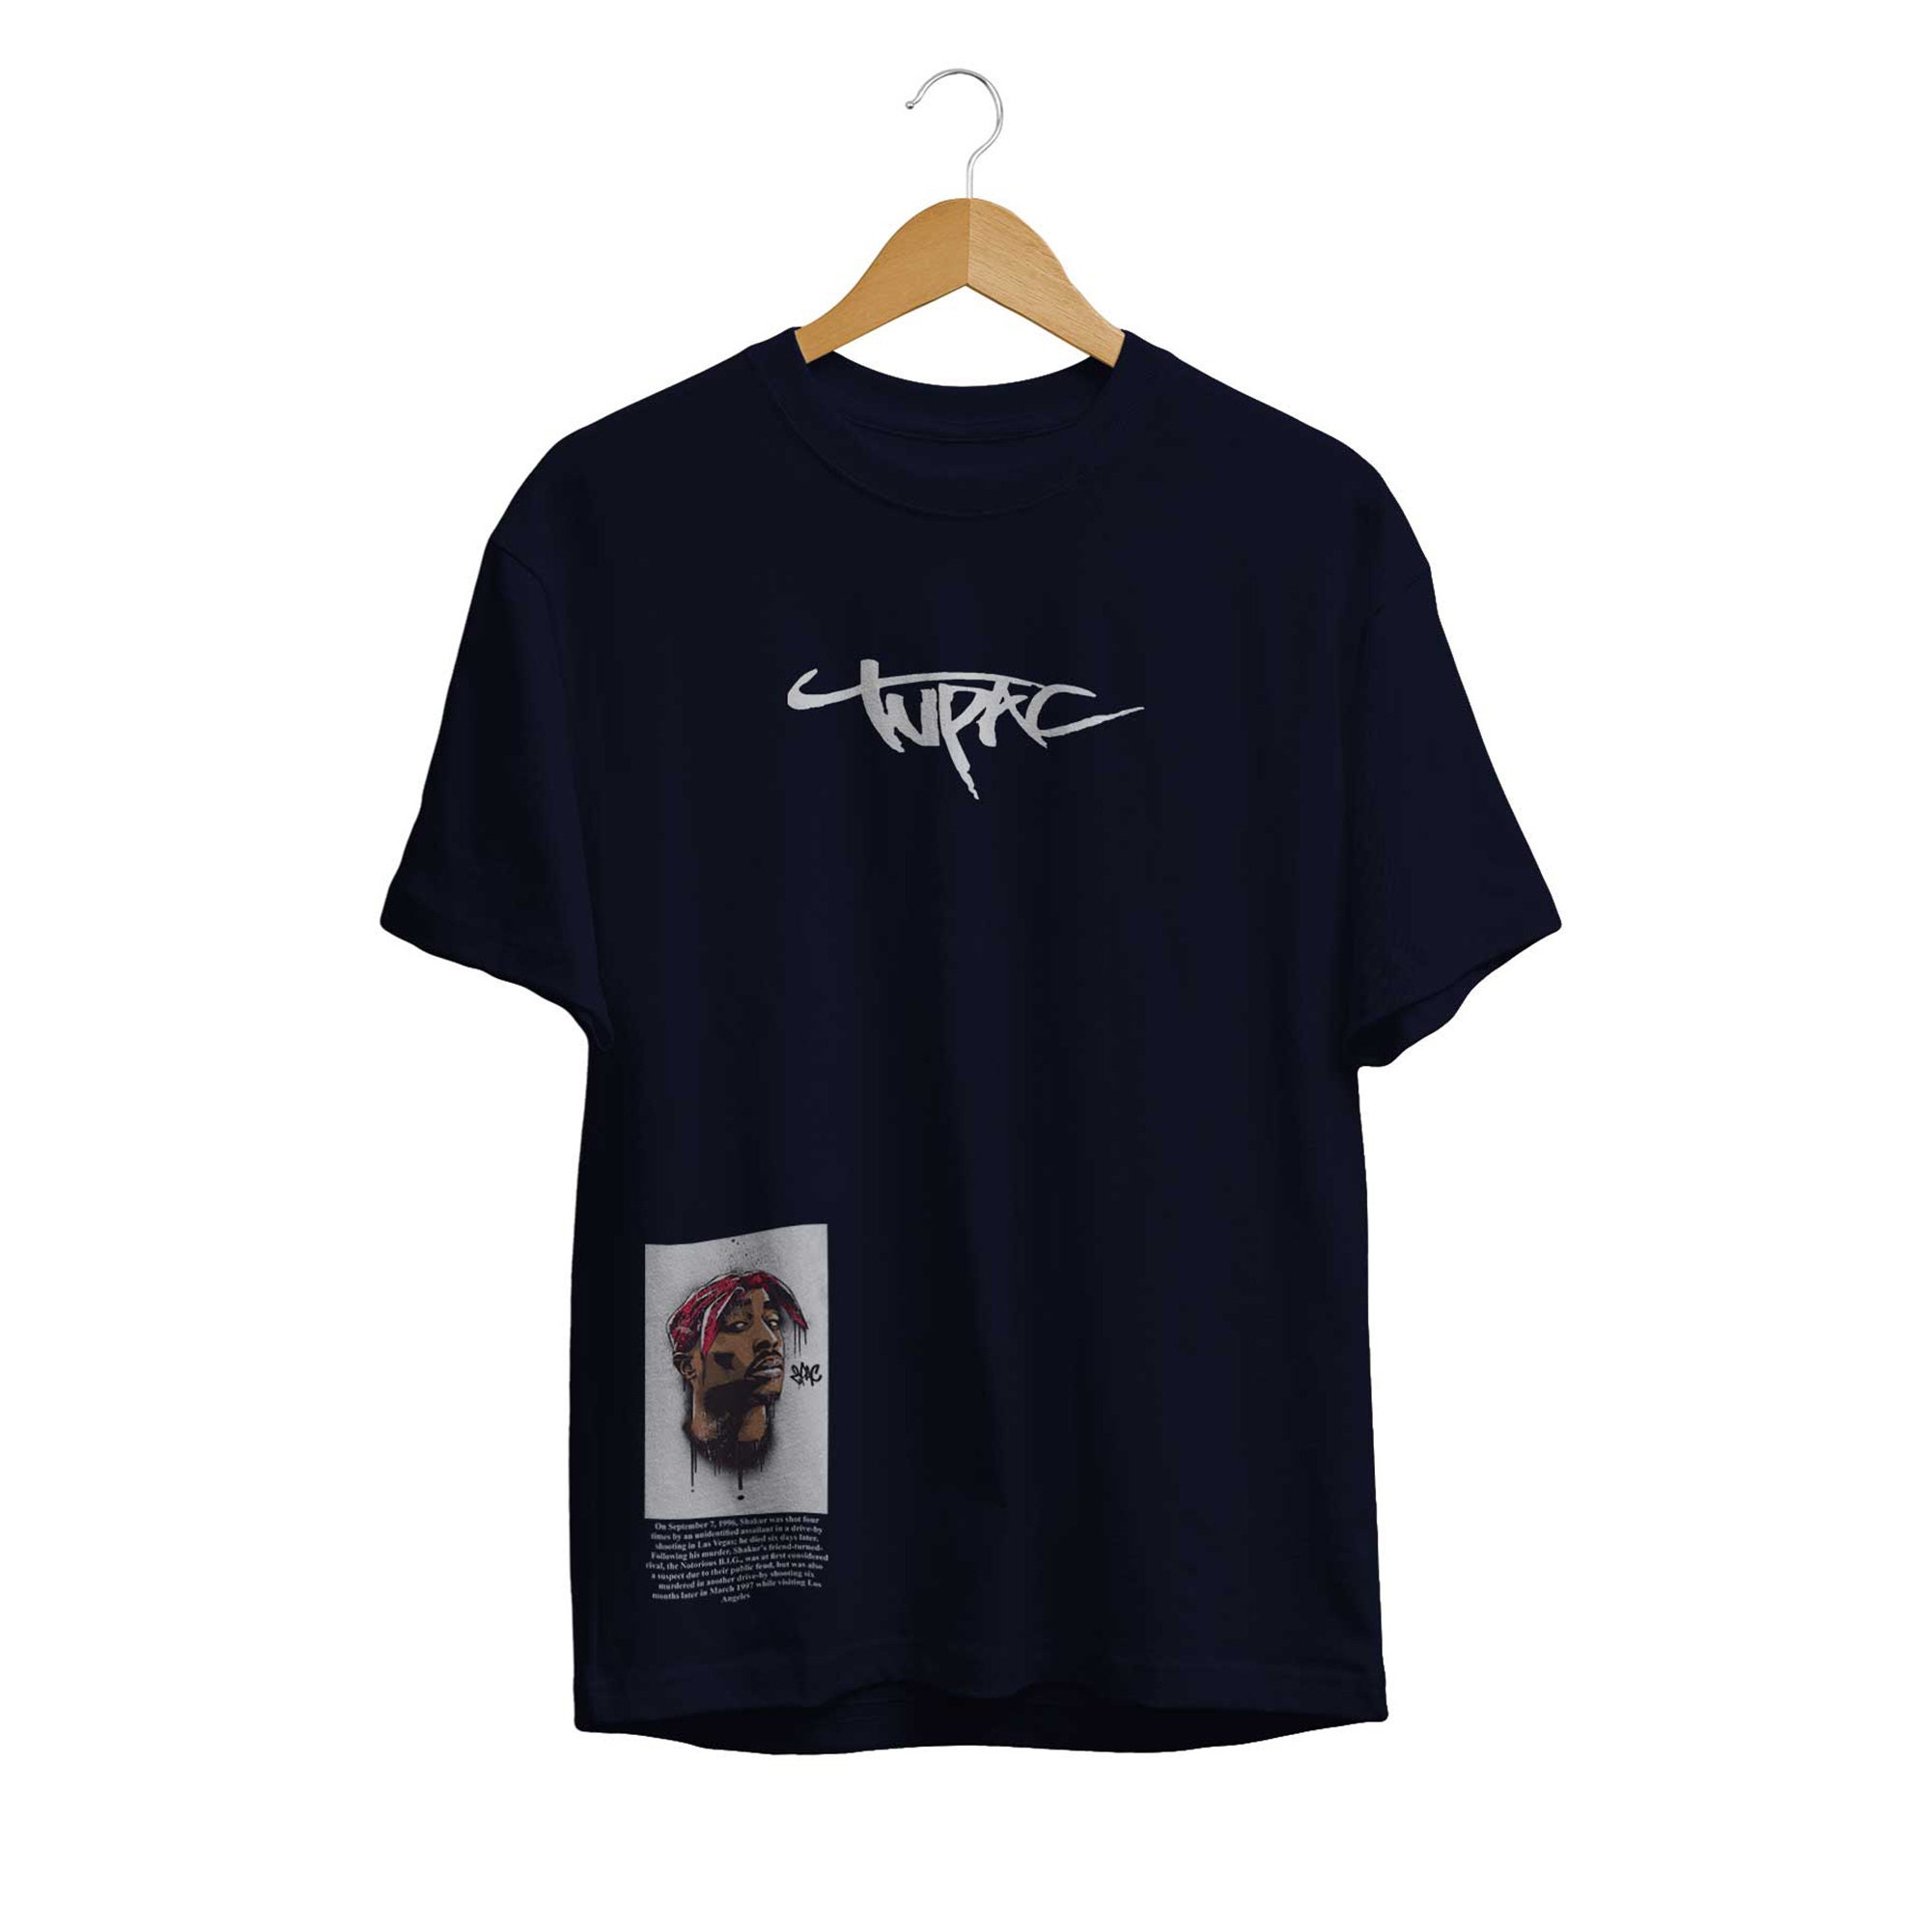 Discover Tupac Shakur 2Pac Murder Story T-shirt, Unisex T-shirt, 2pac shirt, Rap Hip Hop Shirt, Tee, Gift